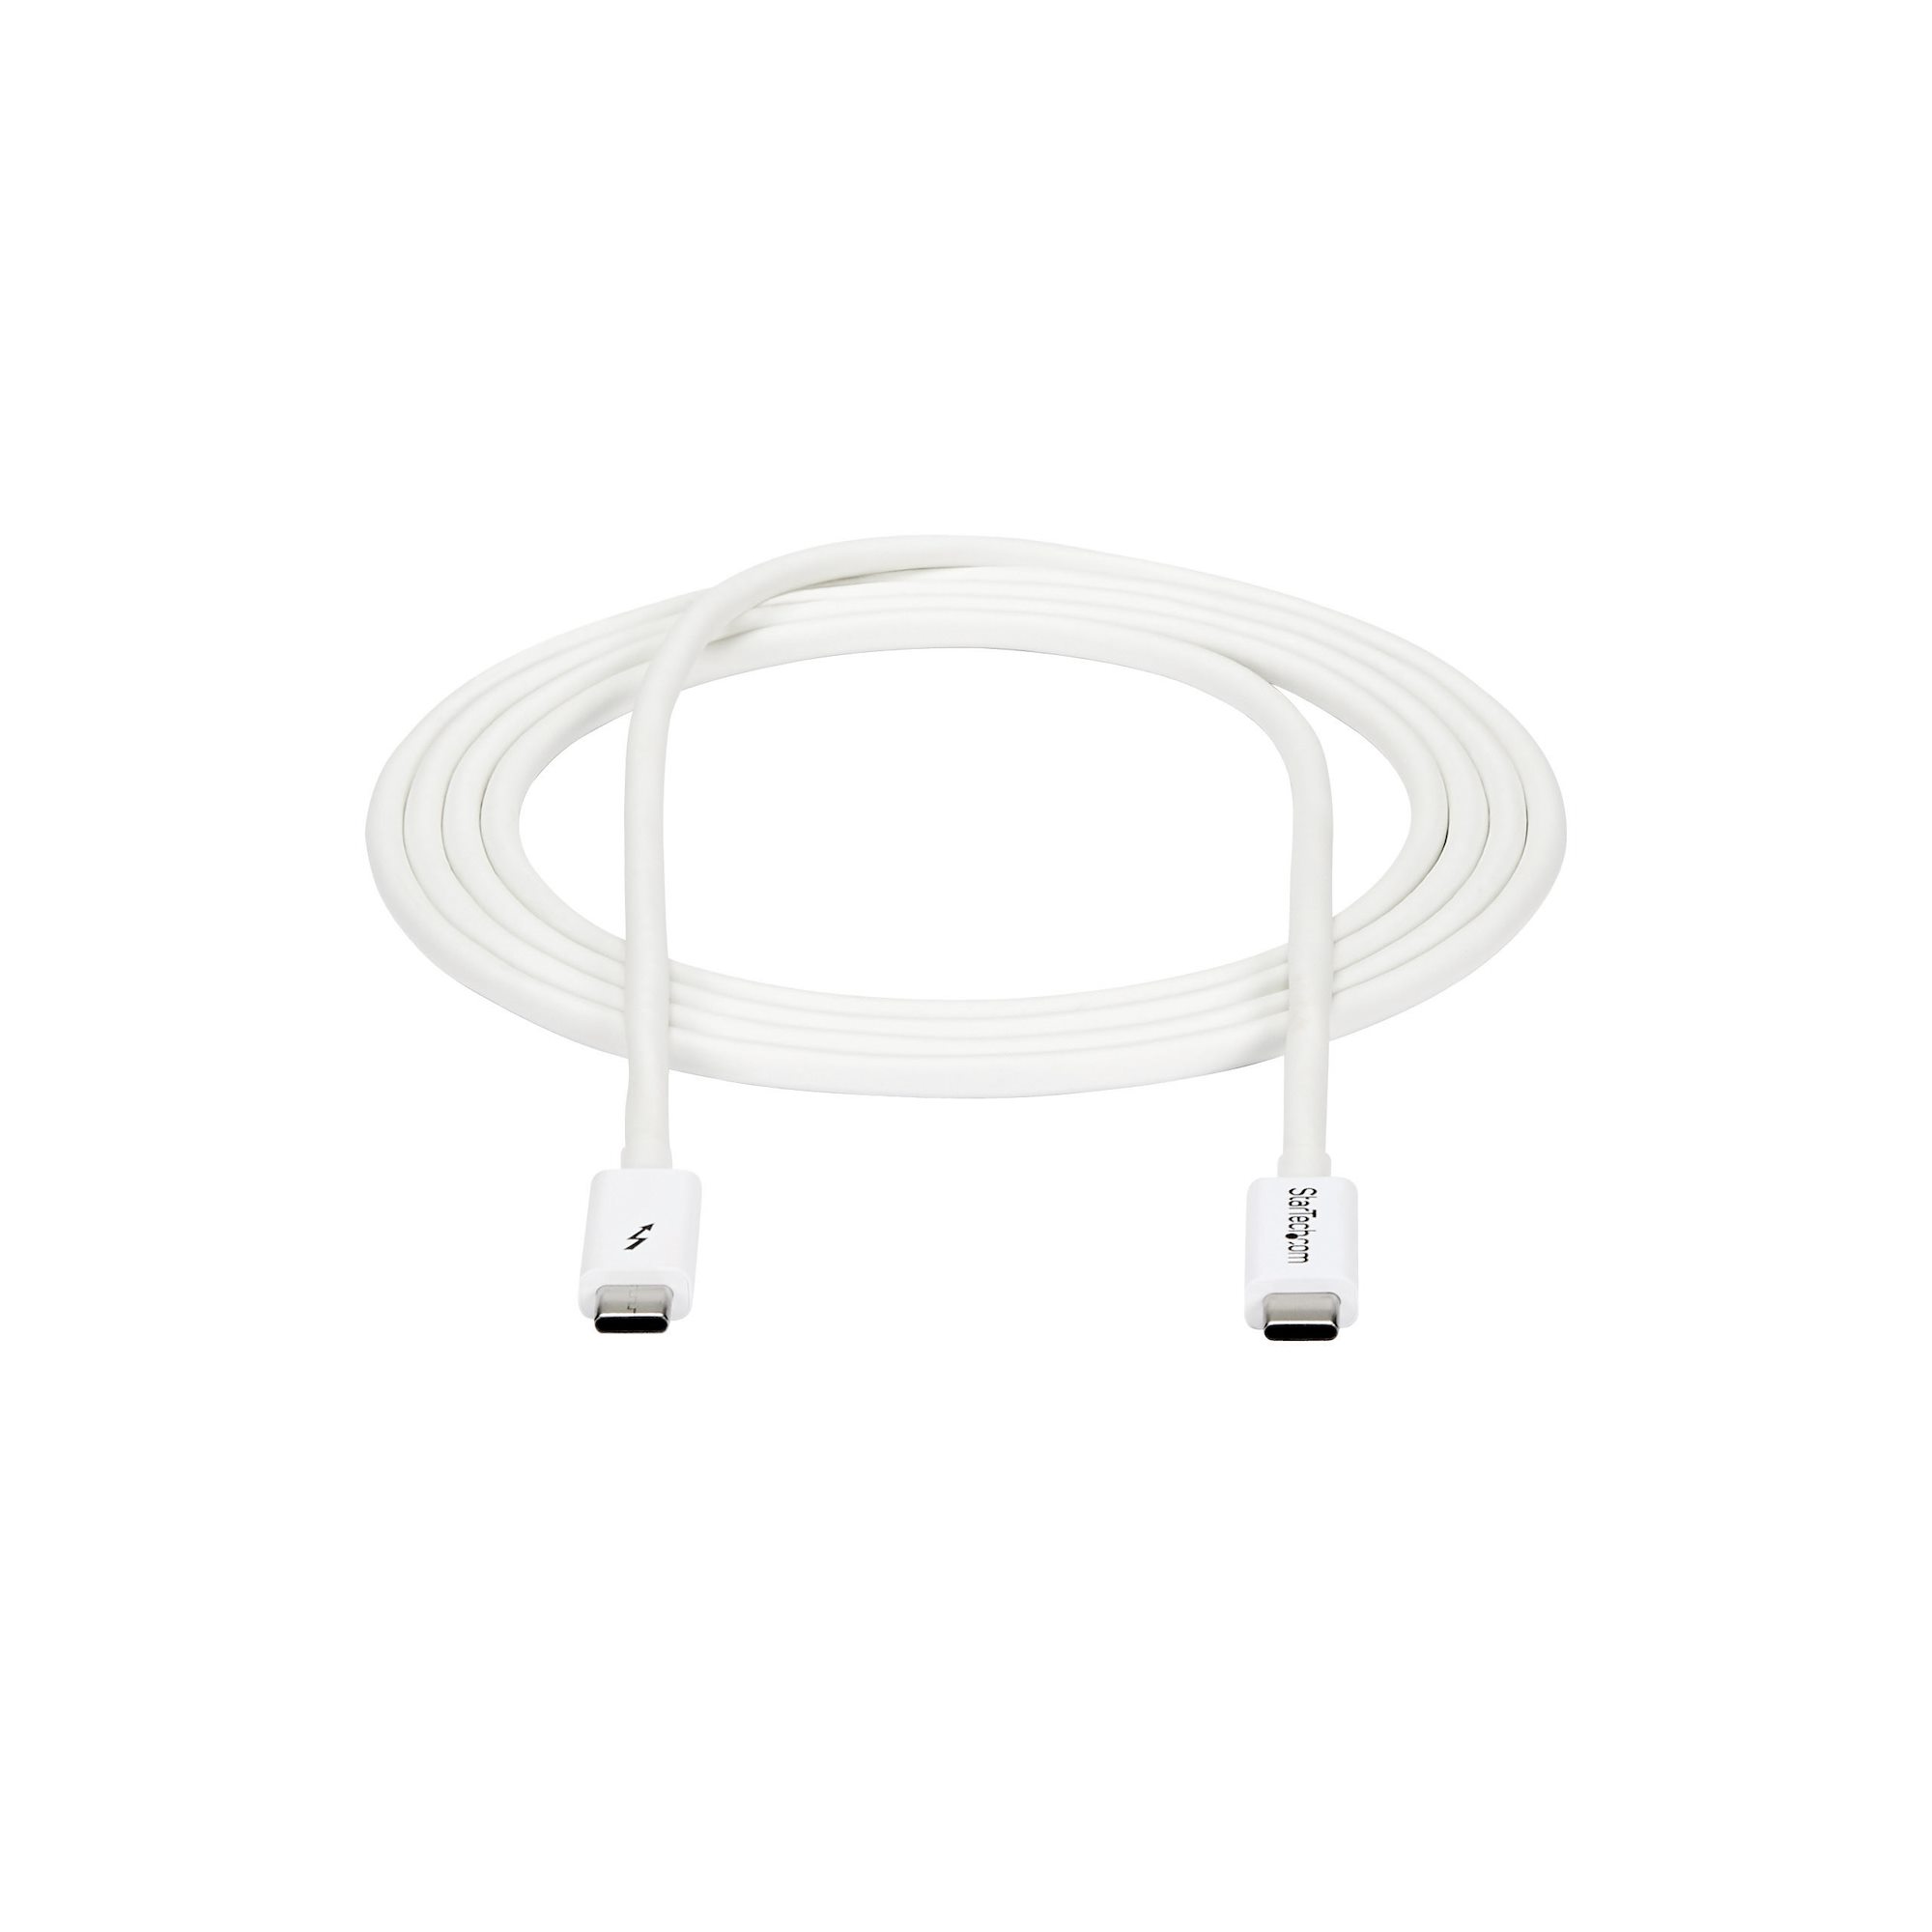 Cable 1m Thunderbolt 3 Blanco Comp DP - Cables y adaptadores Thunderbolt 3